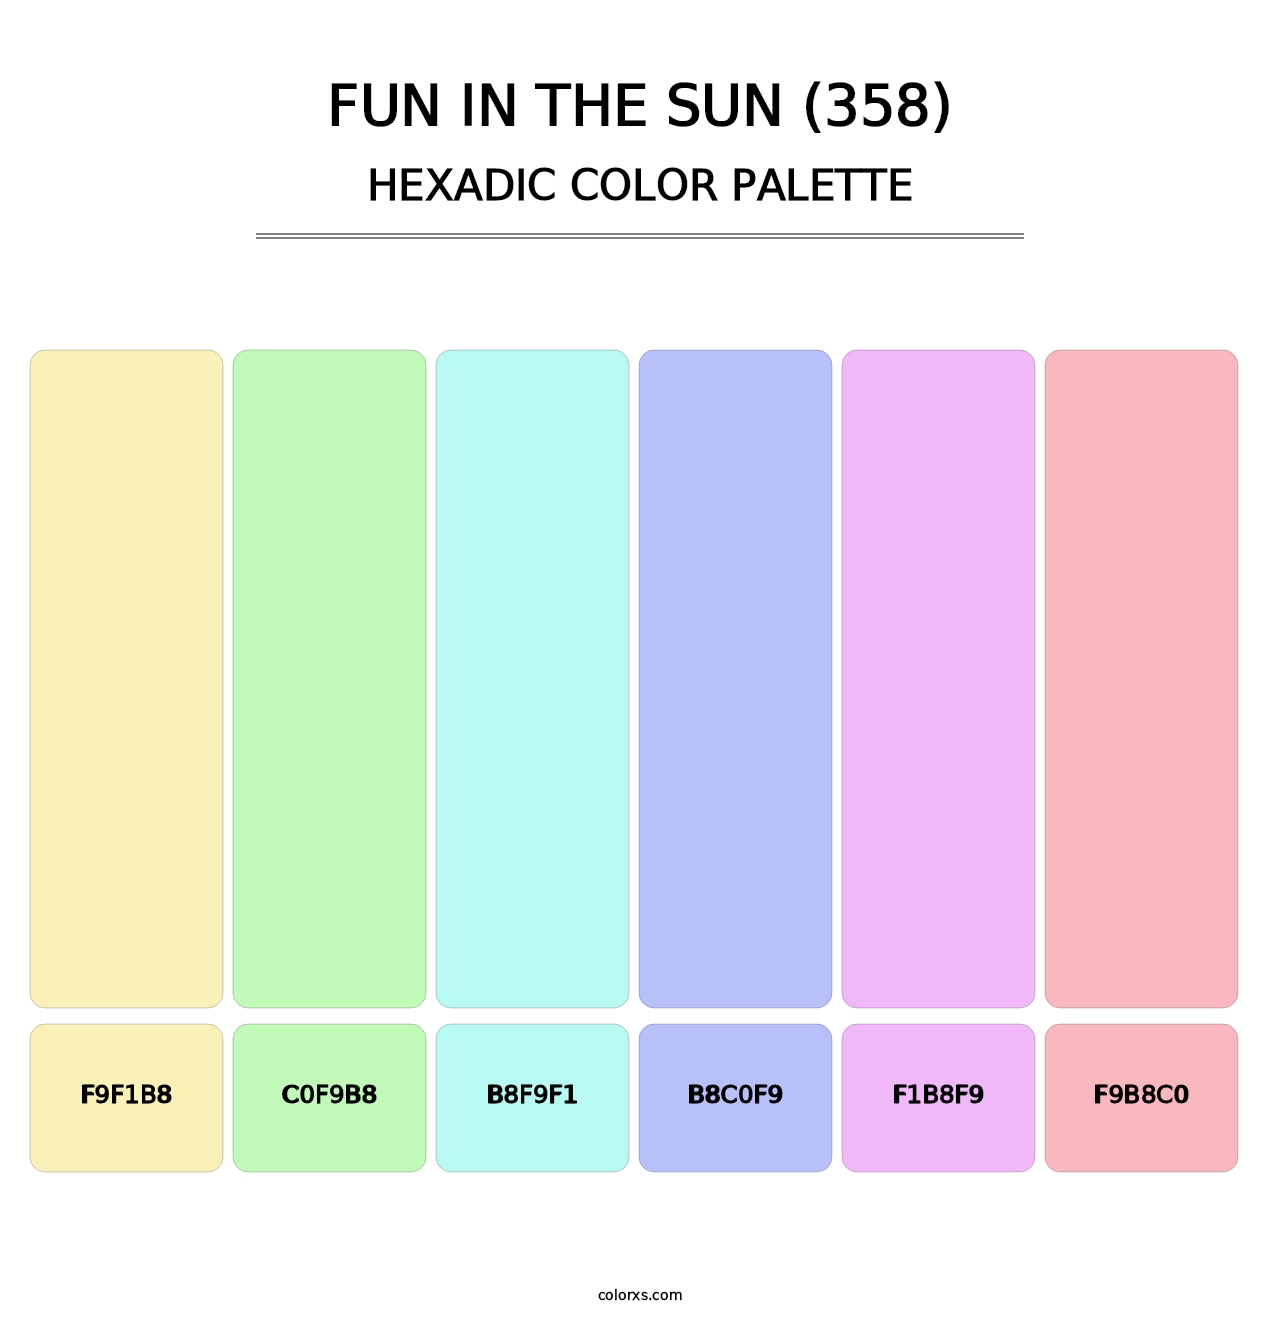 Fun in the Sun (358) - Hexadic Color Palette